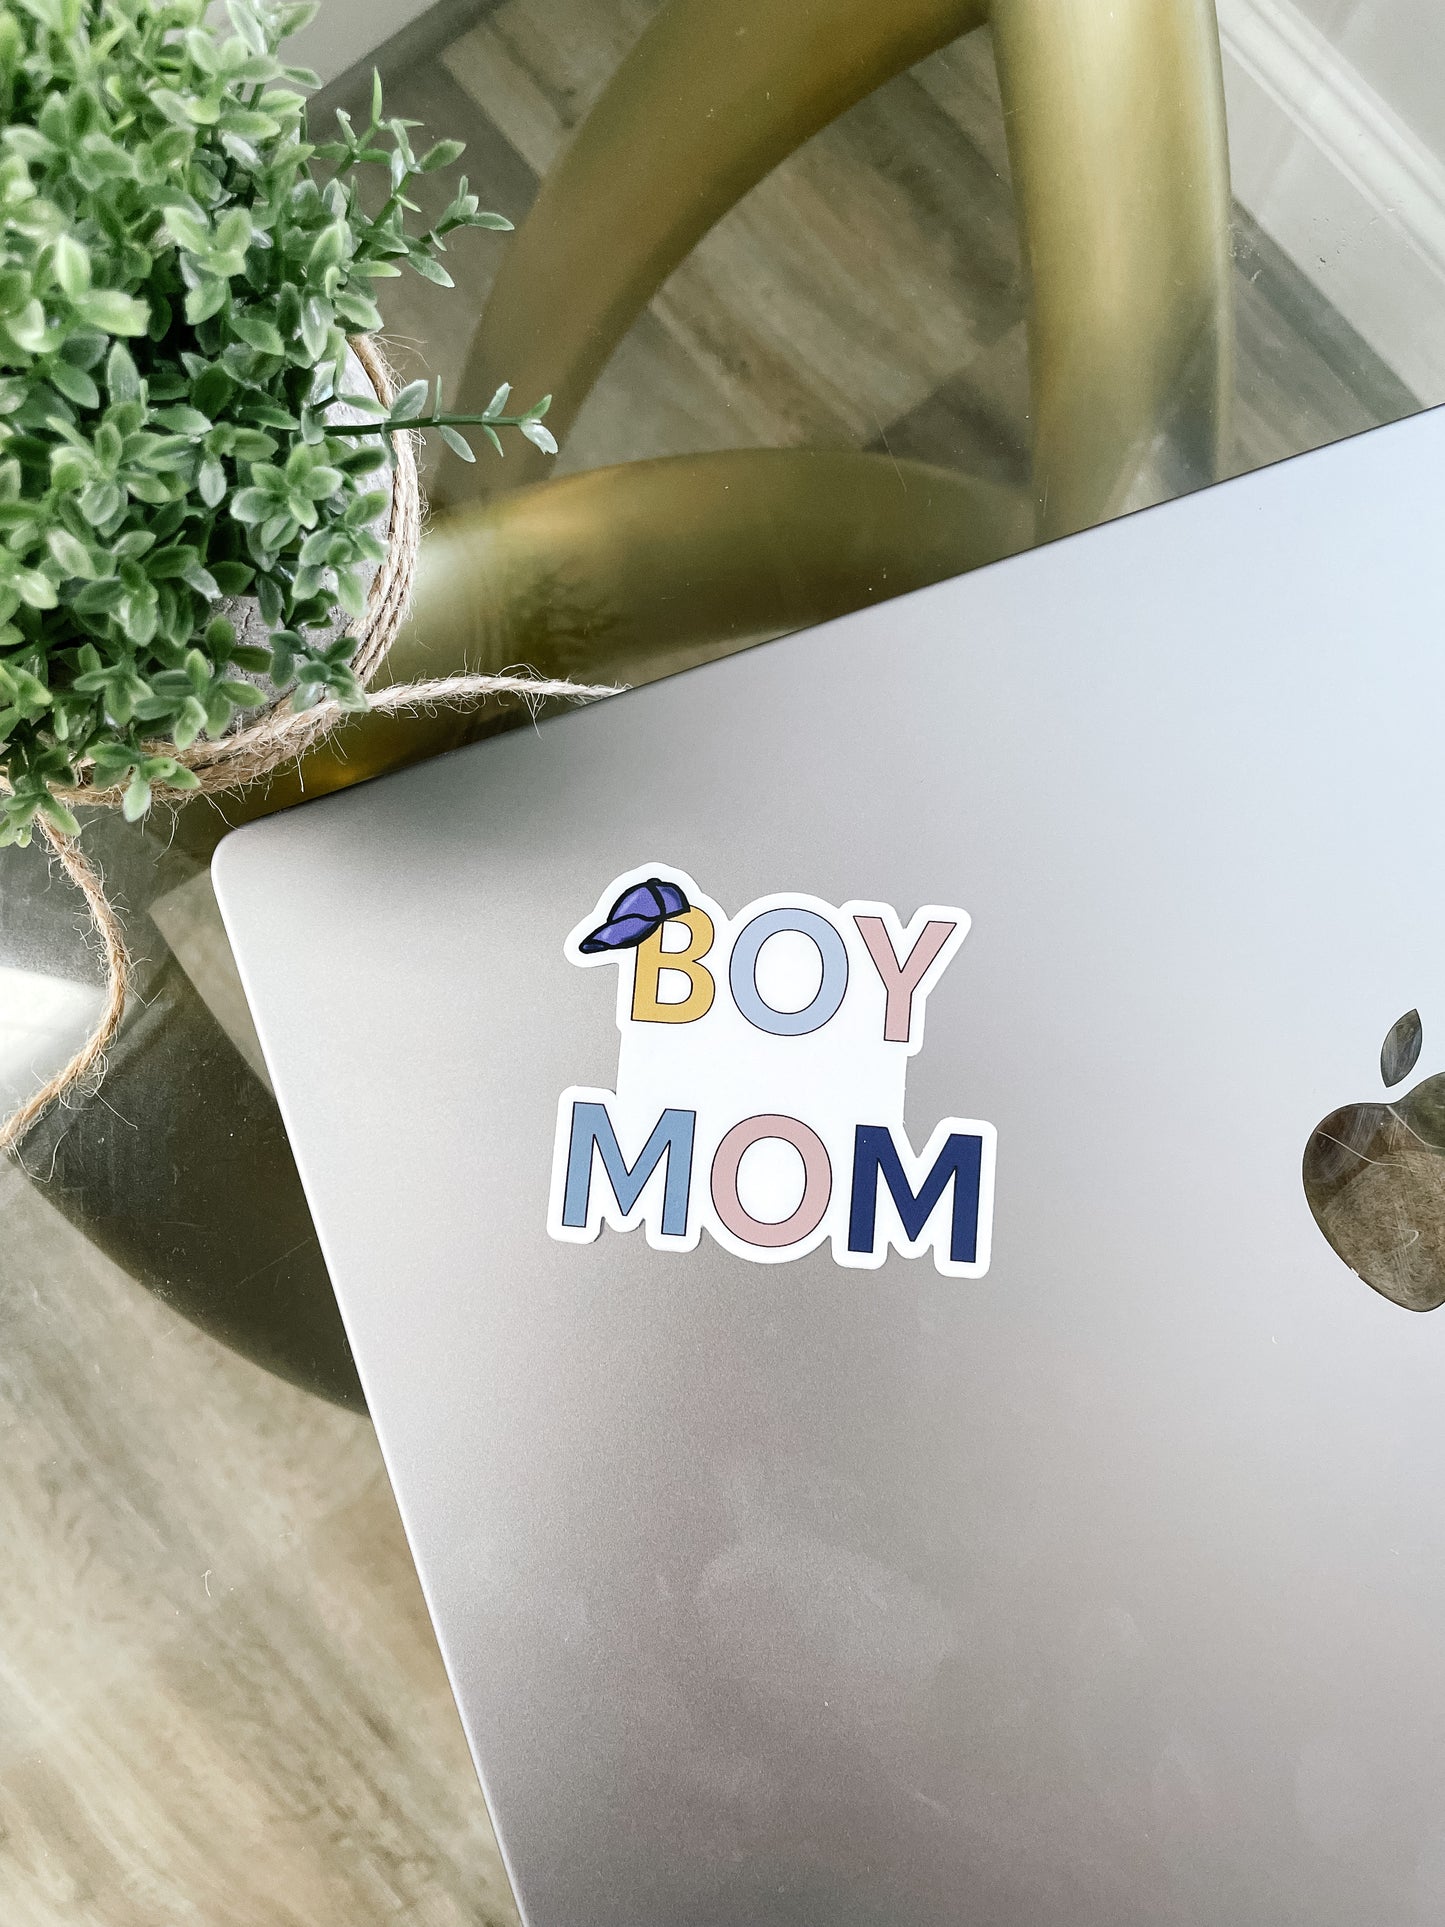 boy mom sticker pictured on laptop